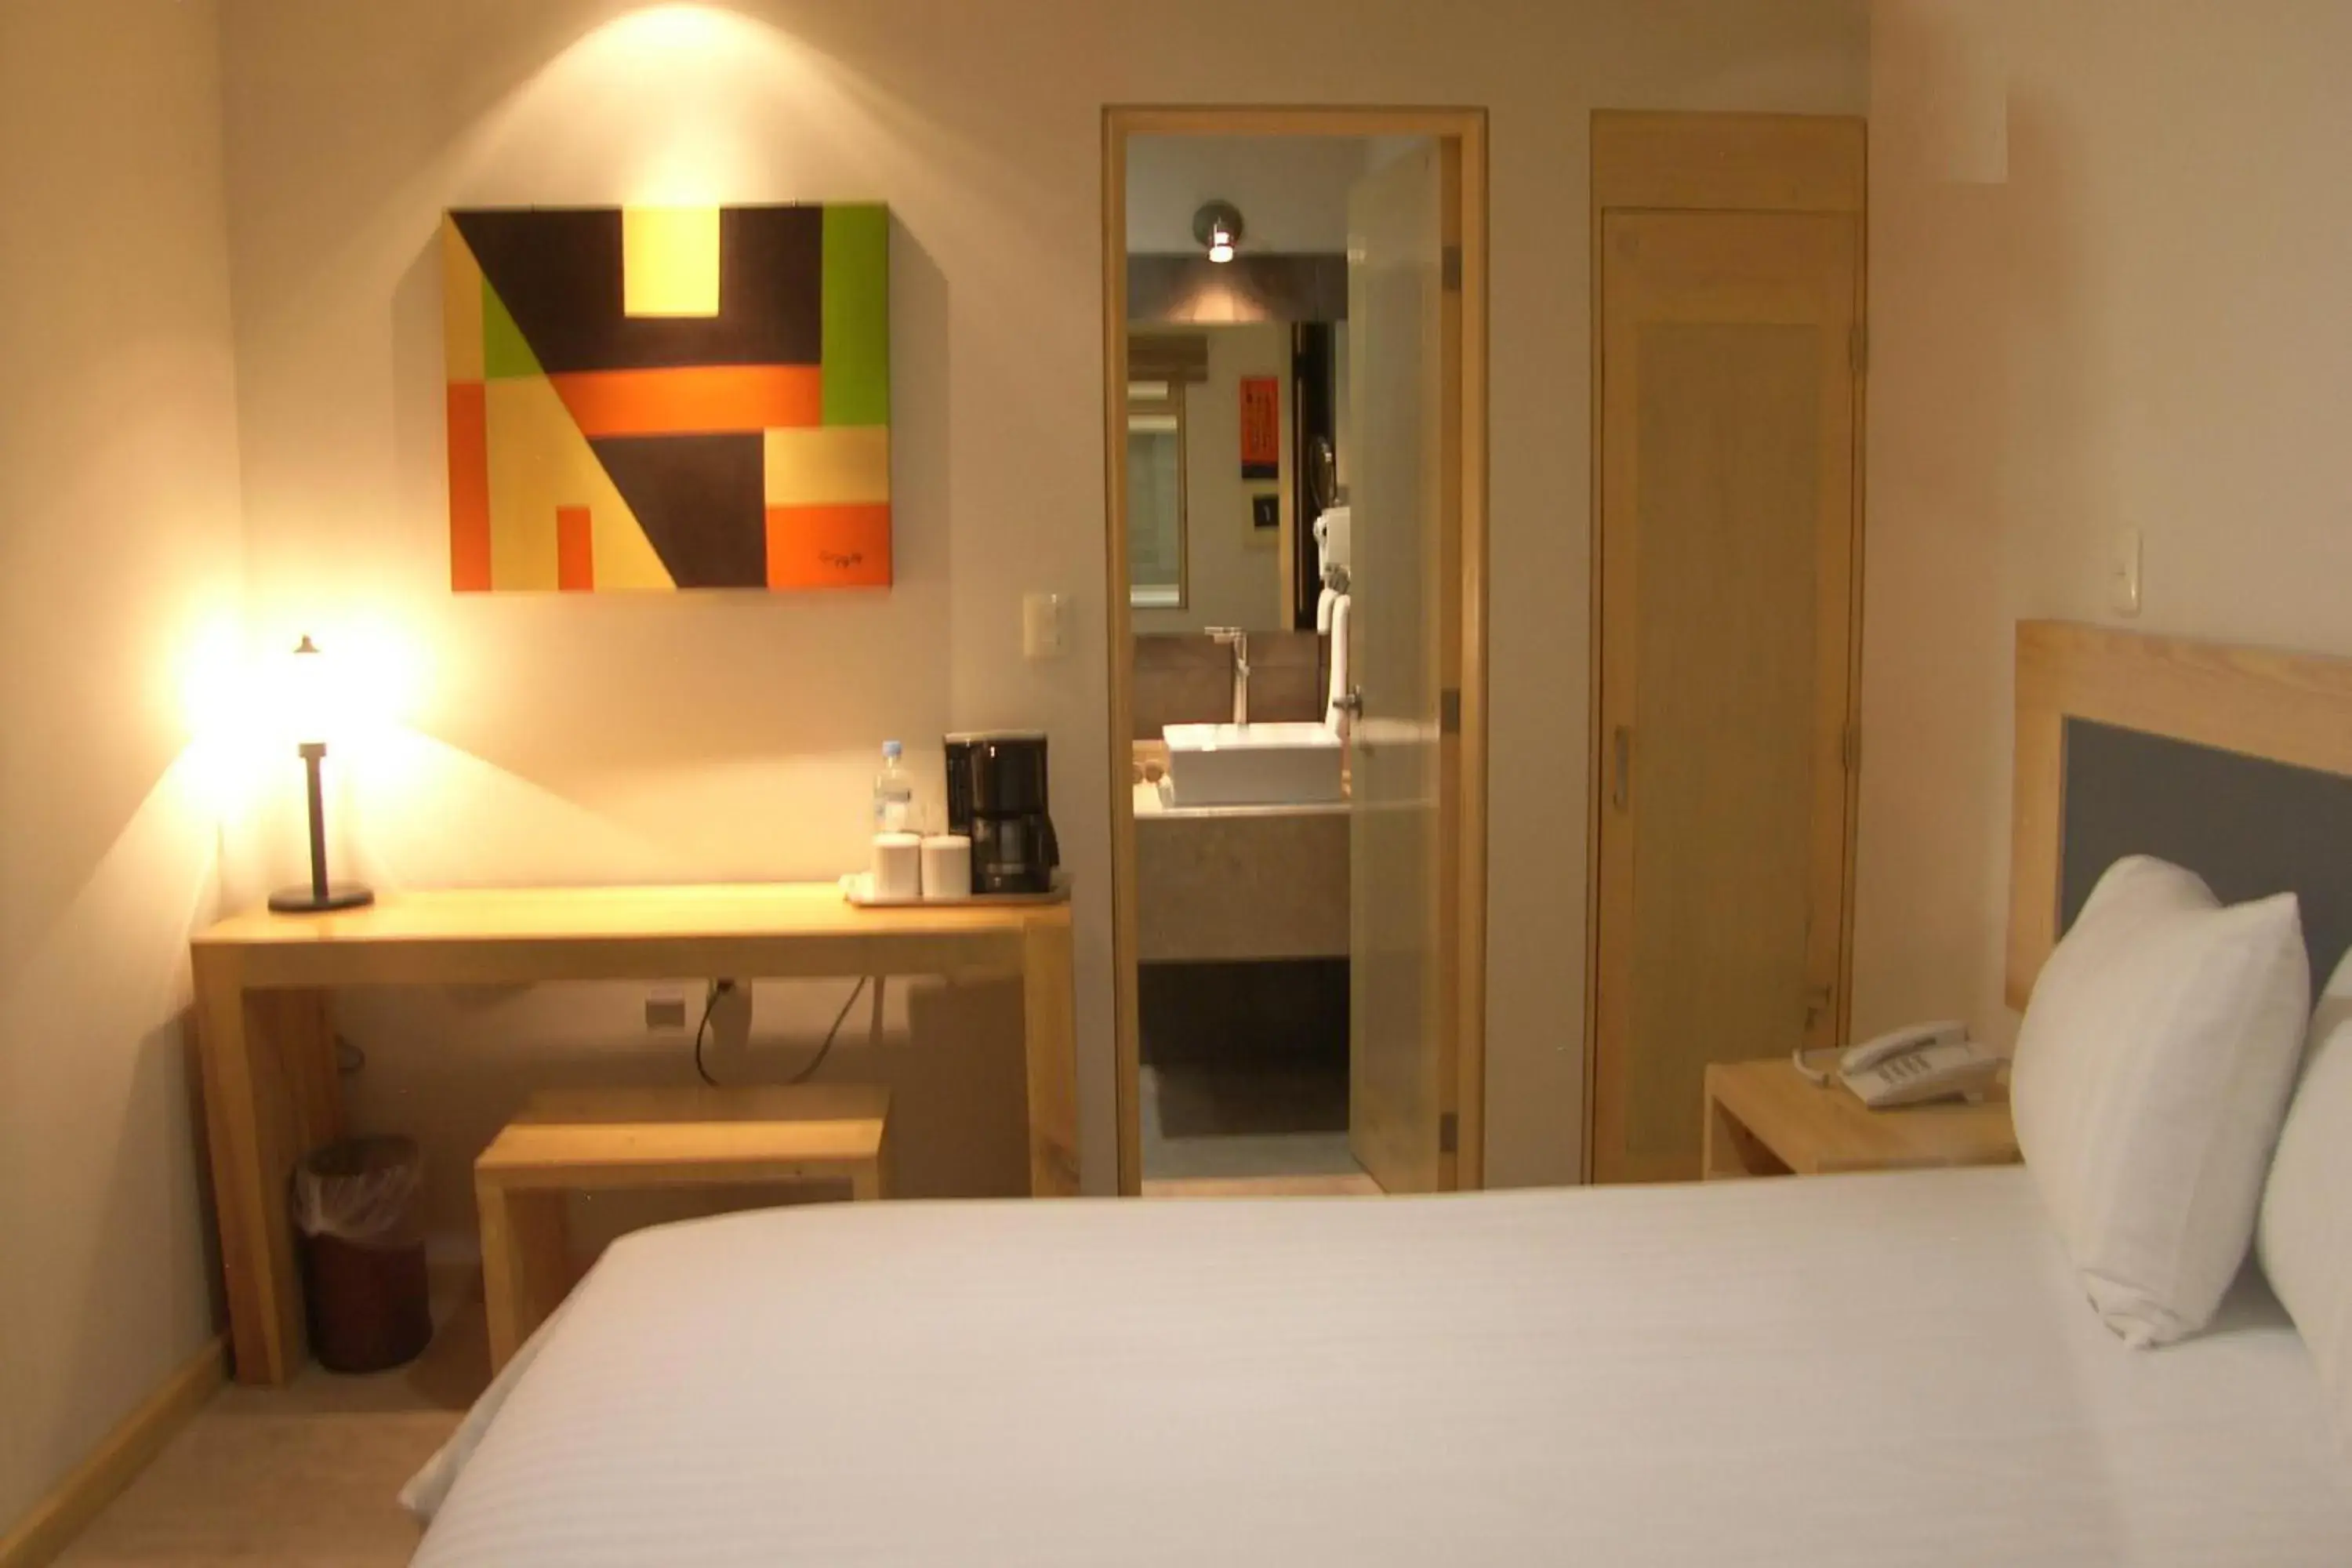 Photo of the whole room, Bathroom in Rymma Hotel